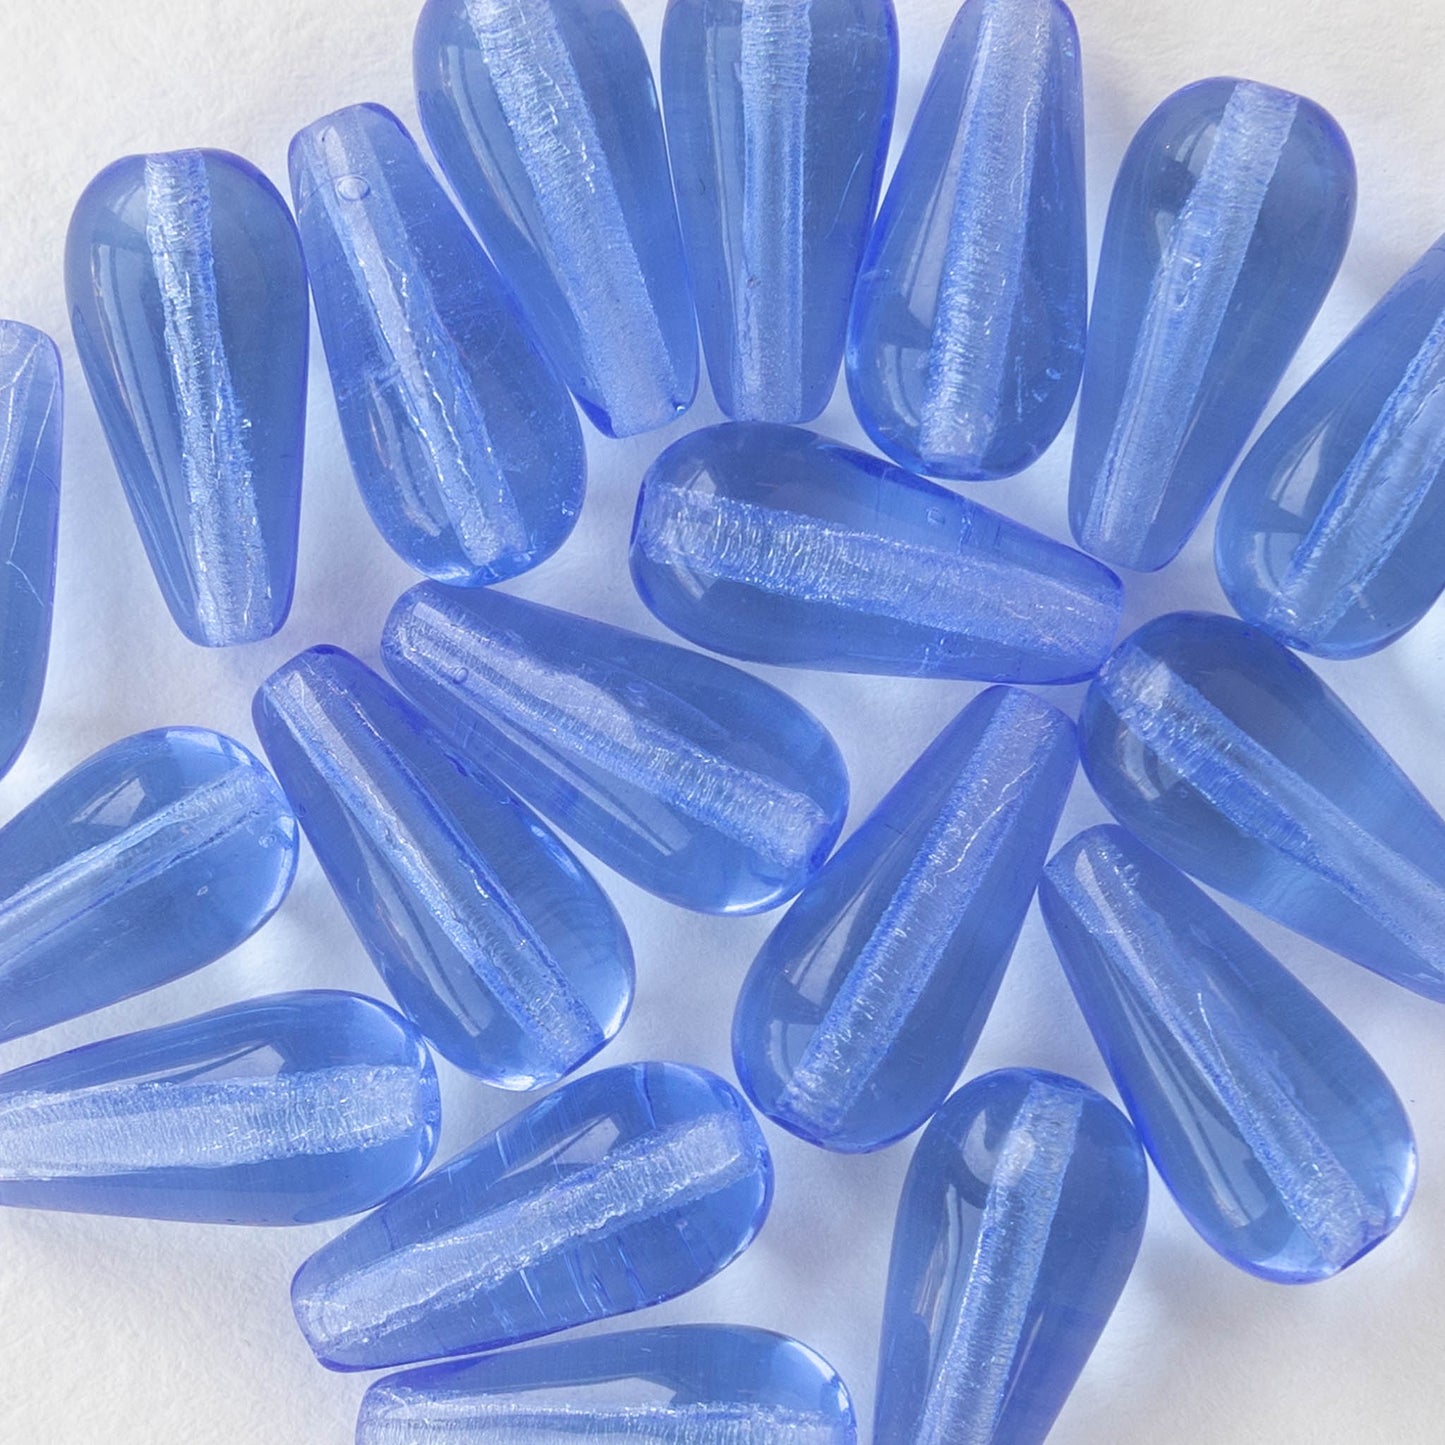 6x13mm Long Drilled Drops - Light Blue Glass Beads - 20 Beads